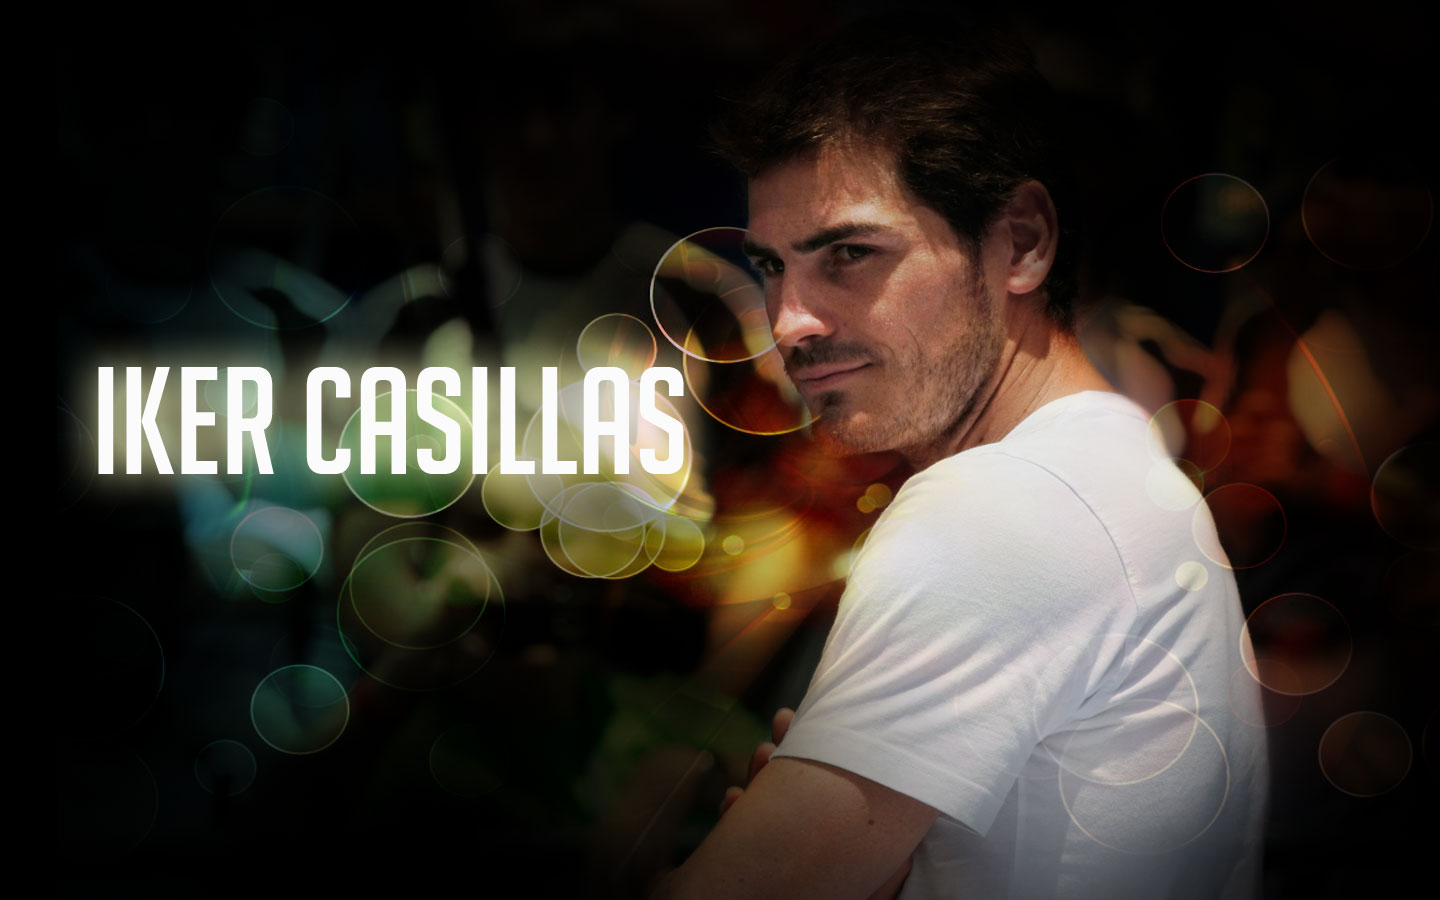 Deskripsi : Wallpaper Simply Casillas, size: 1440x900